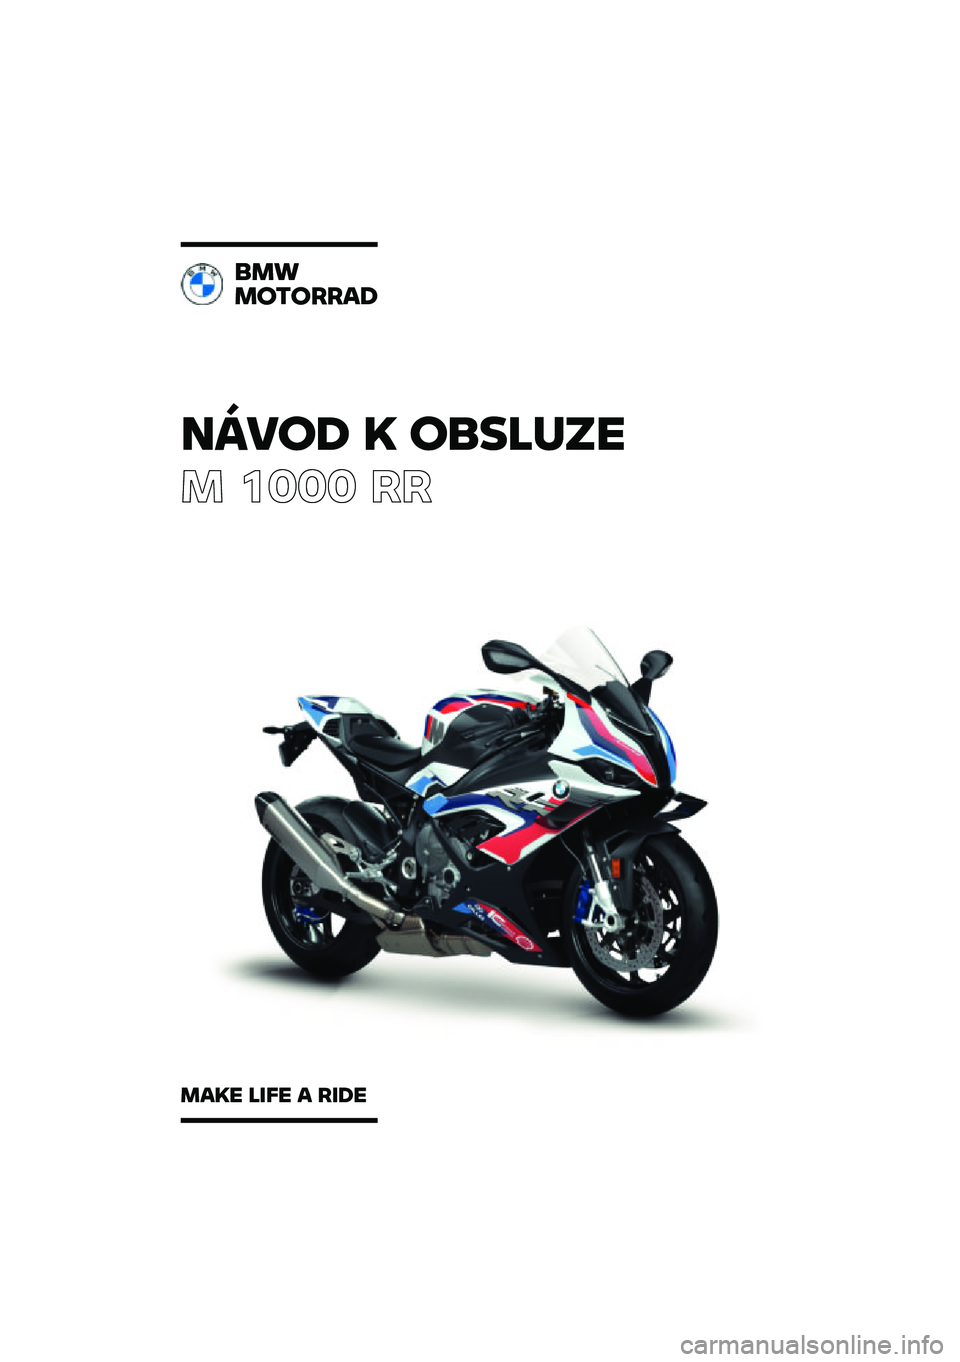 BMW MOTORRAD M 1000 RR 2021  Návod k obsluze (in Czech) �����\b �	 ��
��\f�
��
� ���� ��
�
��
��������\b
���	� �\f��� � ���\b� 